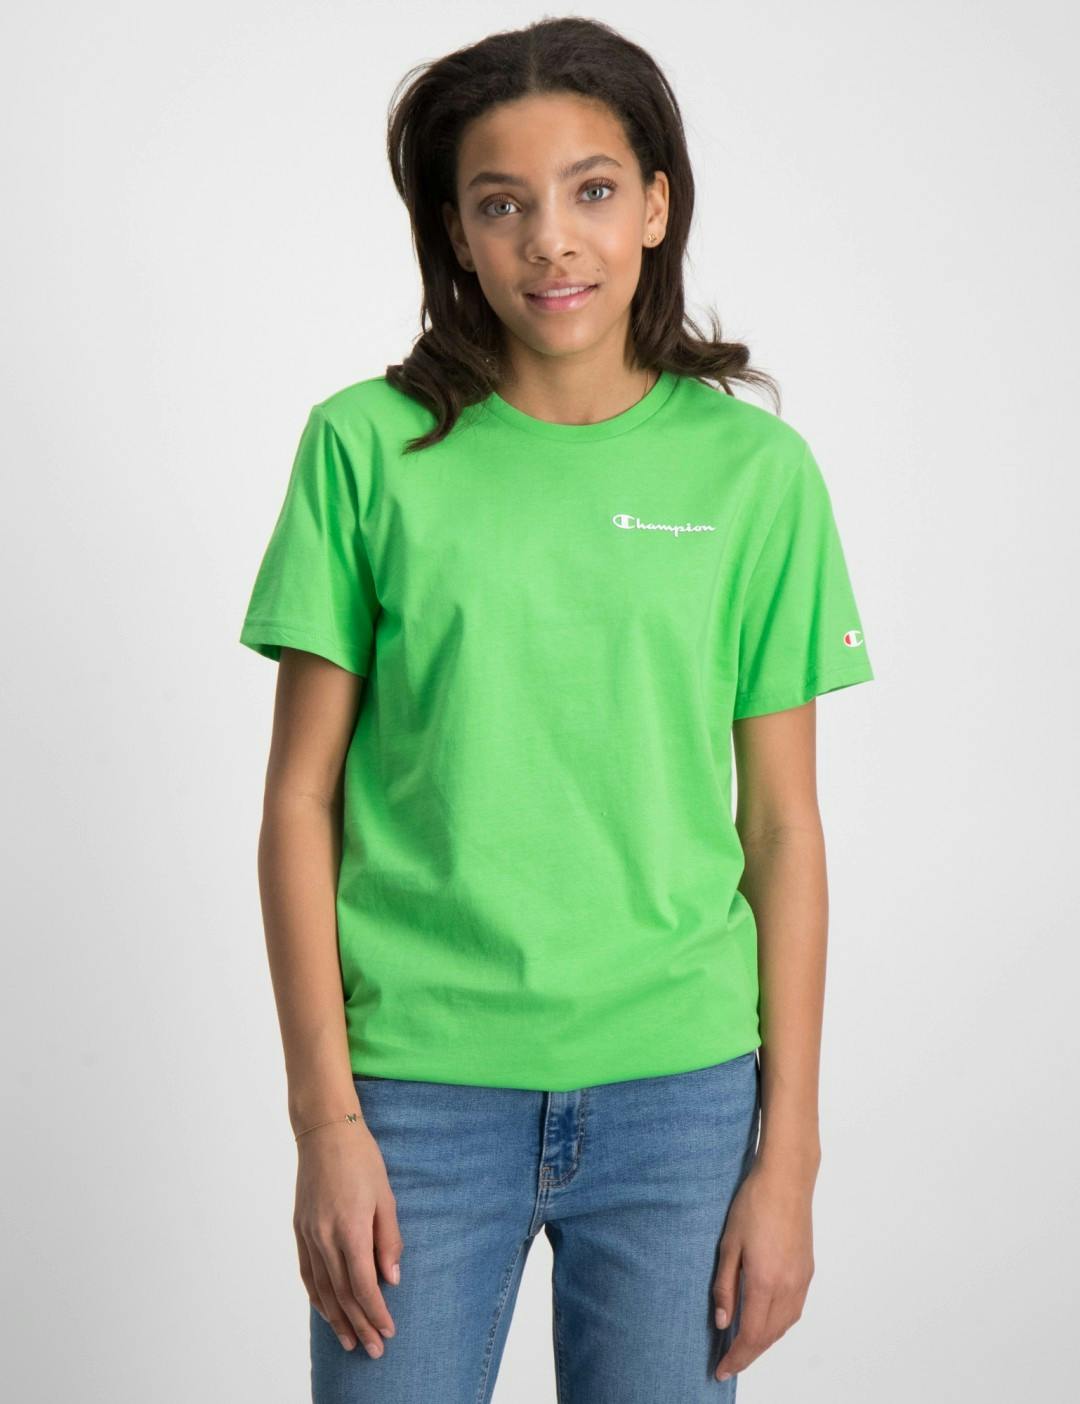 Grün Crewneck T-Shirt für Mädchen | Kids Brand Store | Sport-T-Shirts